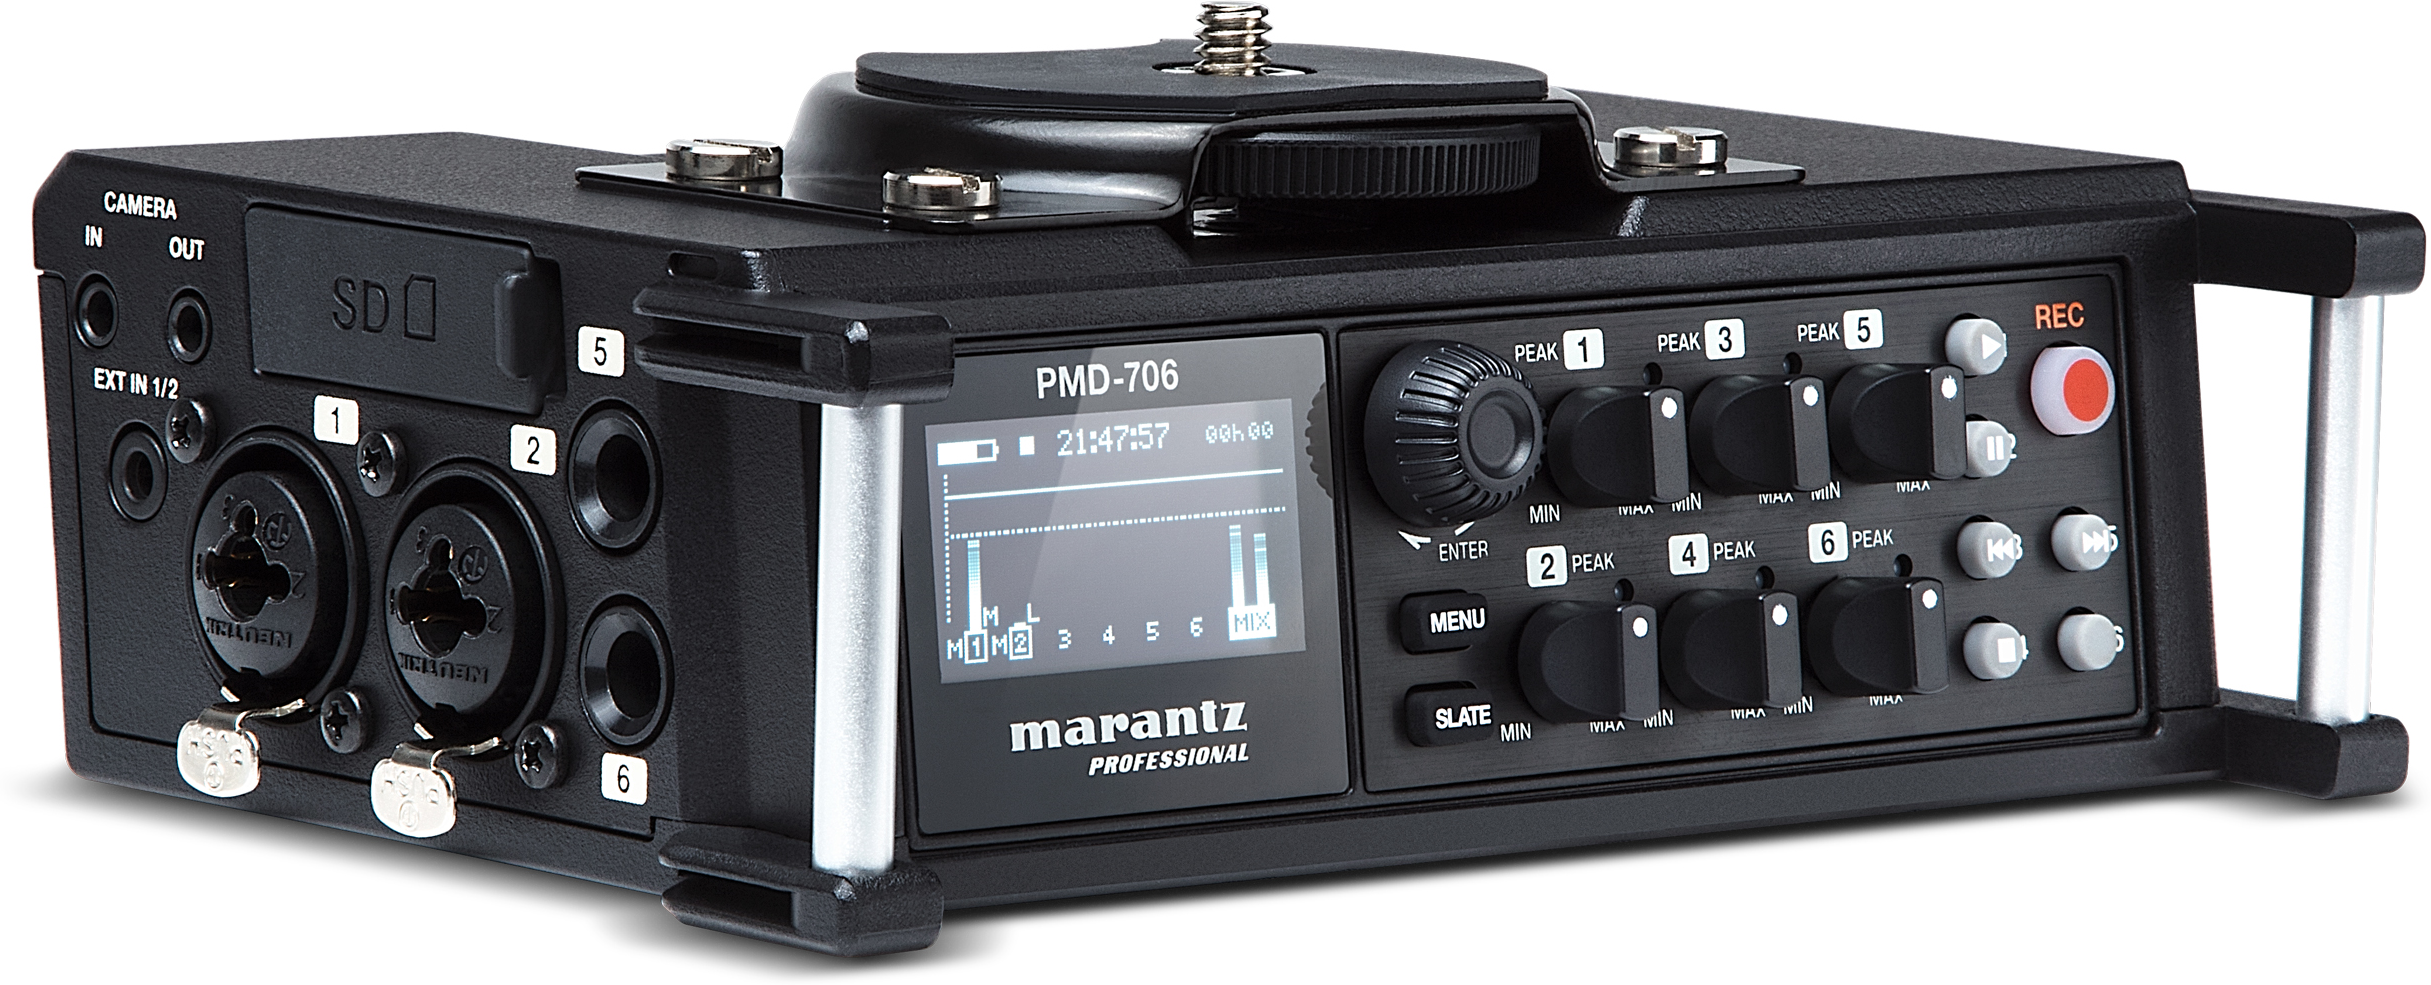 Marantz Pmd-706 - Mobile Recorder - Main picture